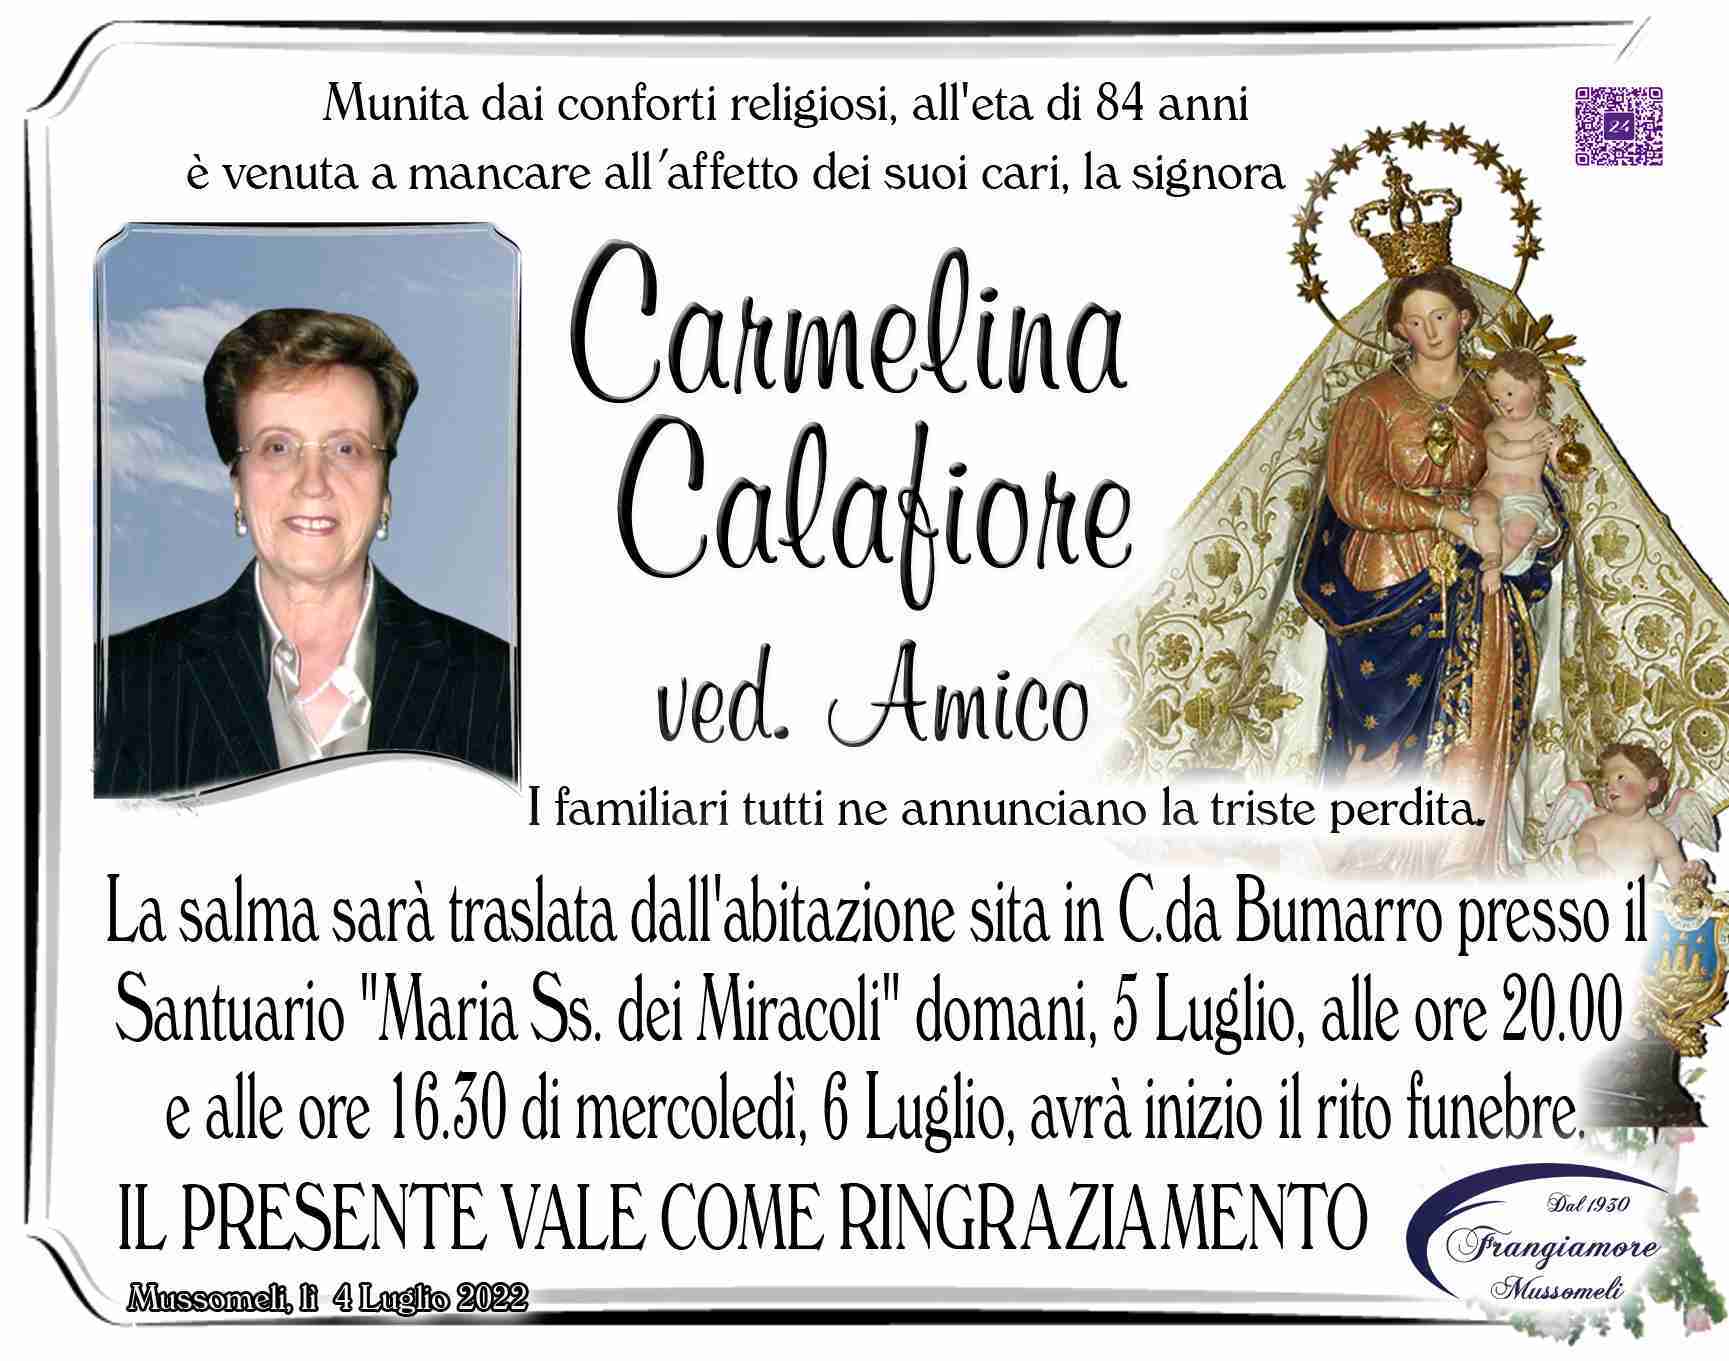 Carmelina Calafiore